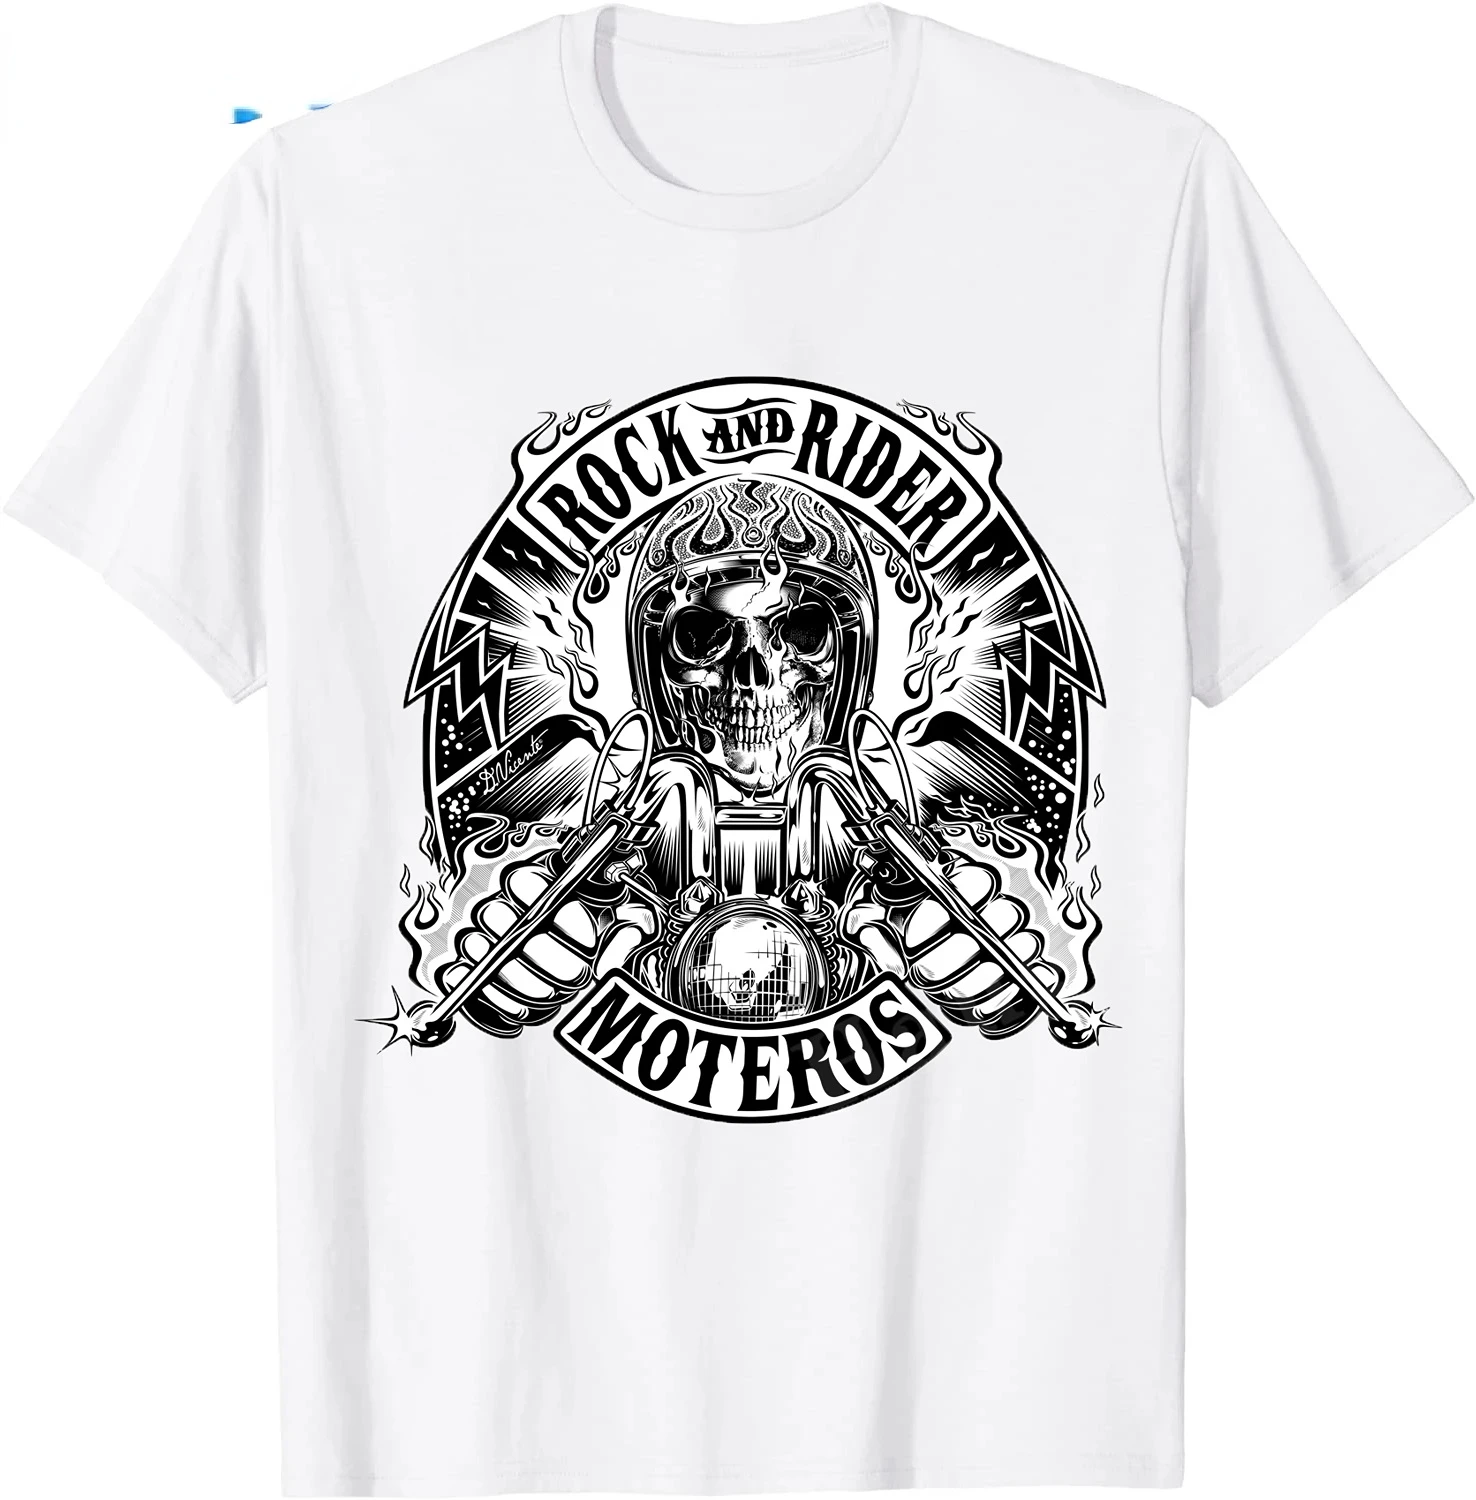 

Rock and Rider Moteros Skull Print T Shirt Men Funny Design Short Sleeve Casual Hip Hop Streetwear Printed Unisex T Shirt